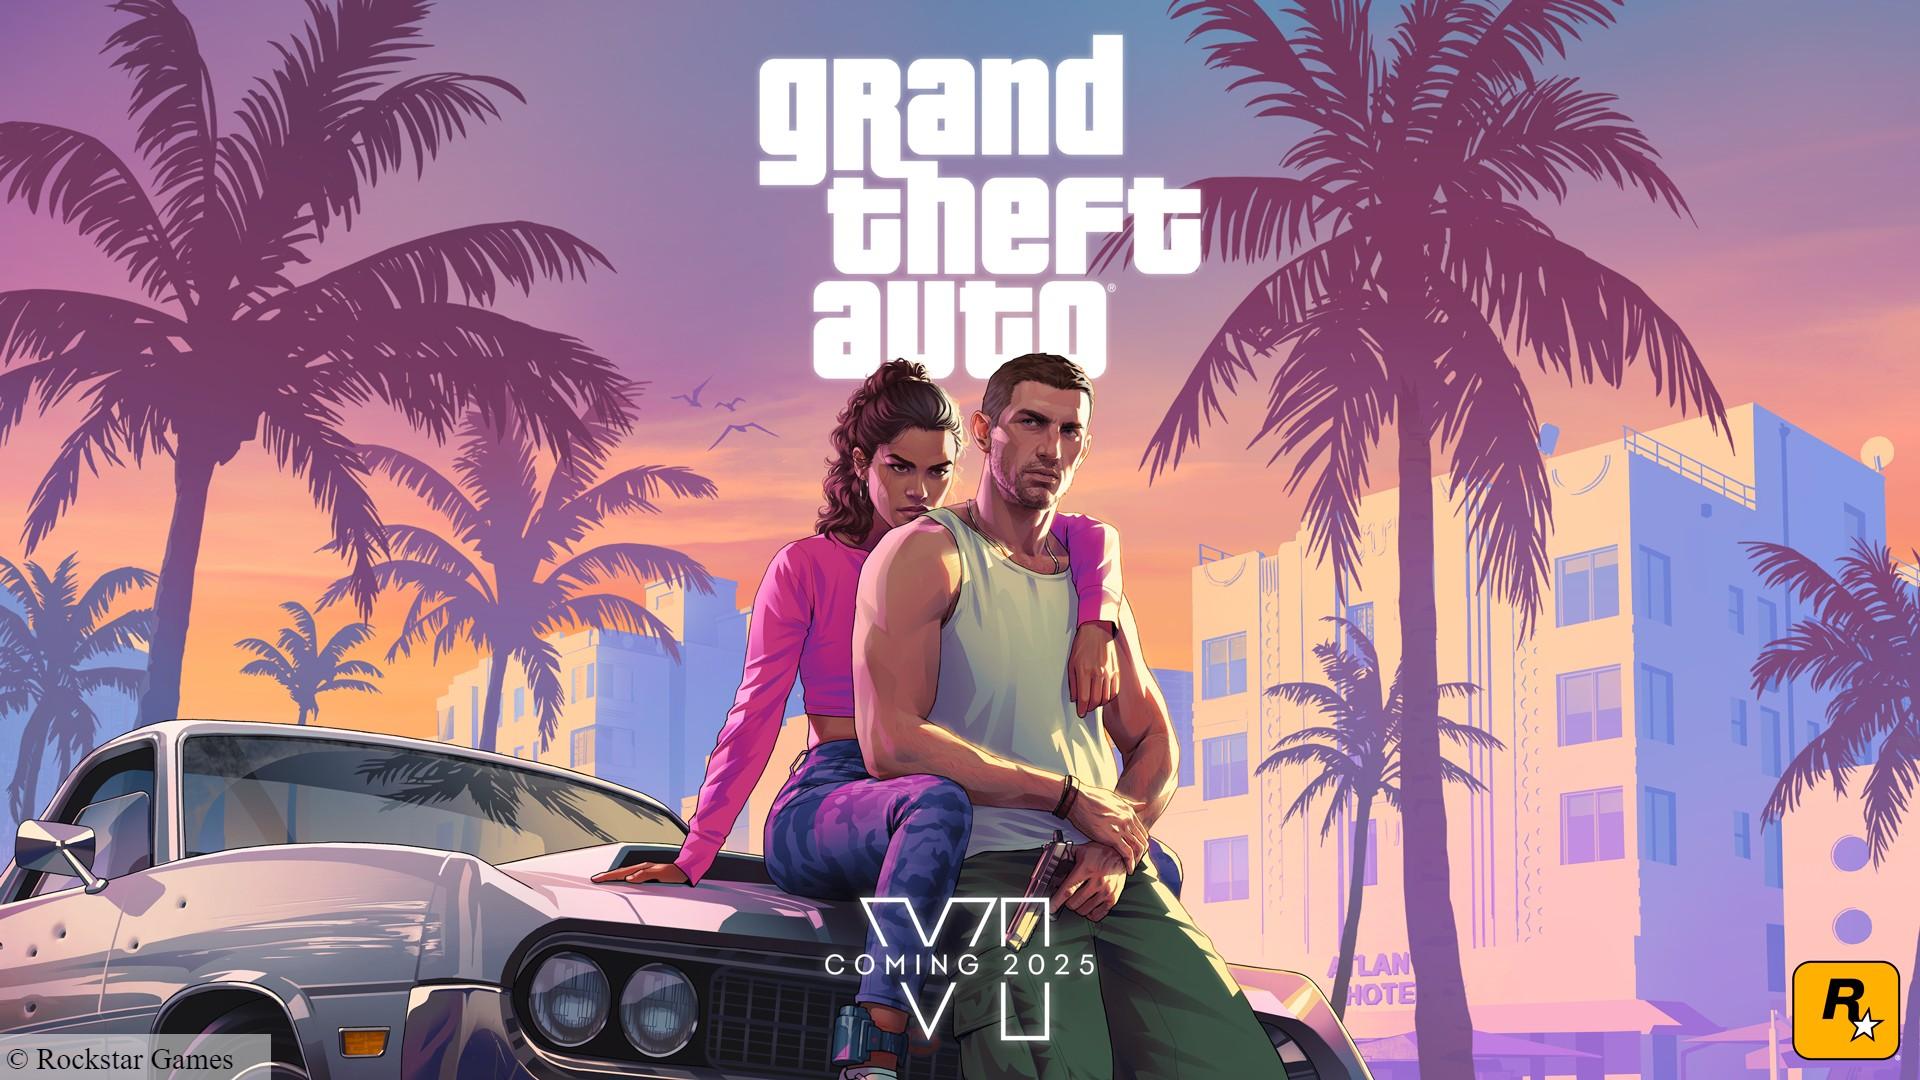 GTA 6 trailer: Lucia from Rockstar sandbx game Grand Theft Auto 6